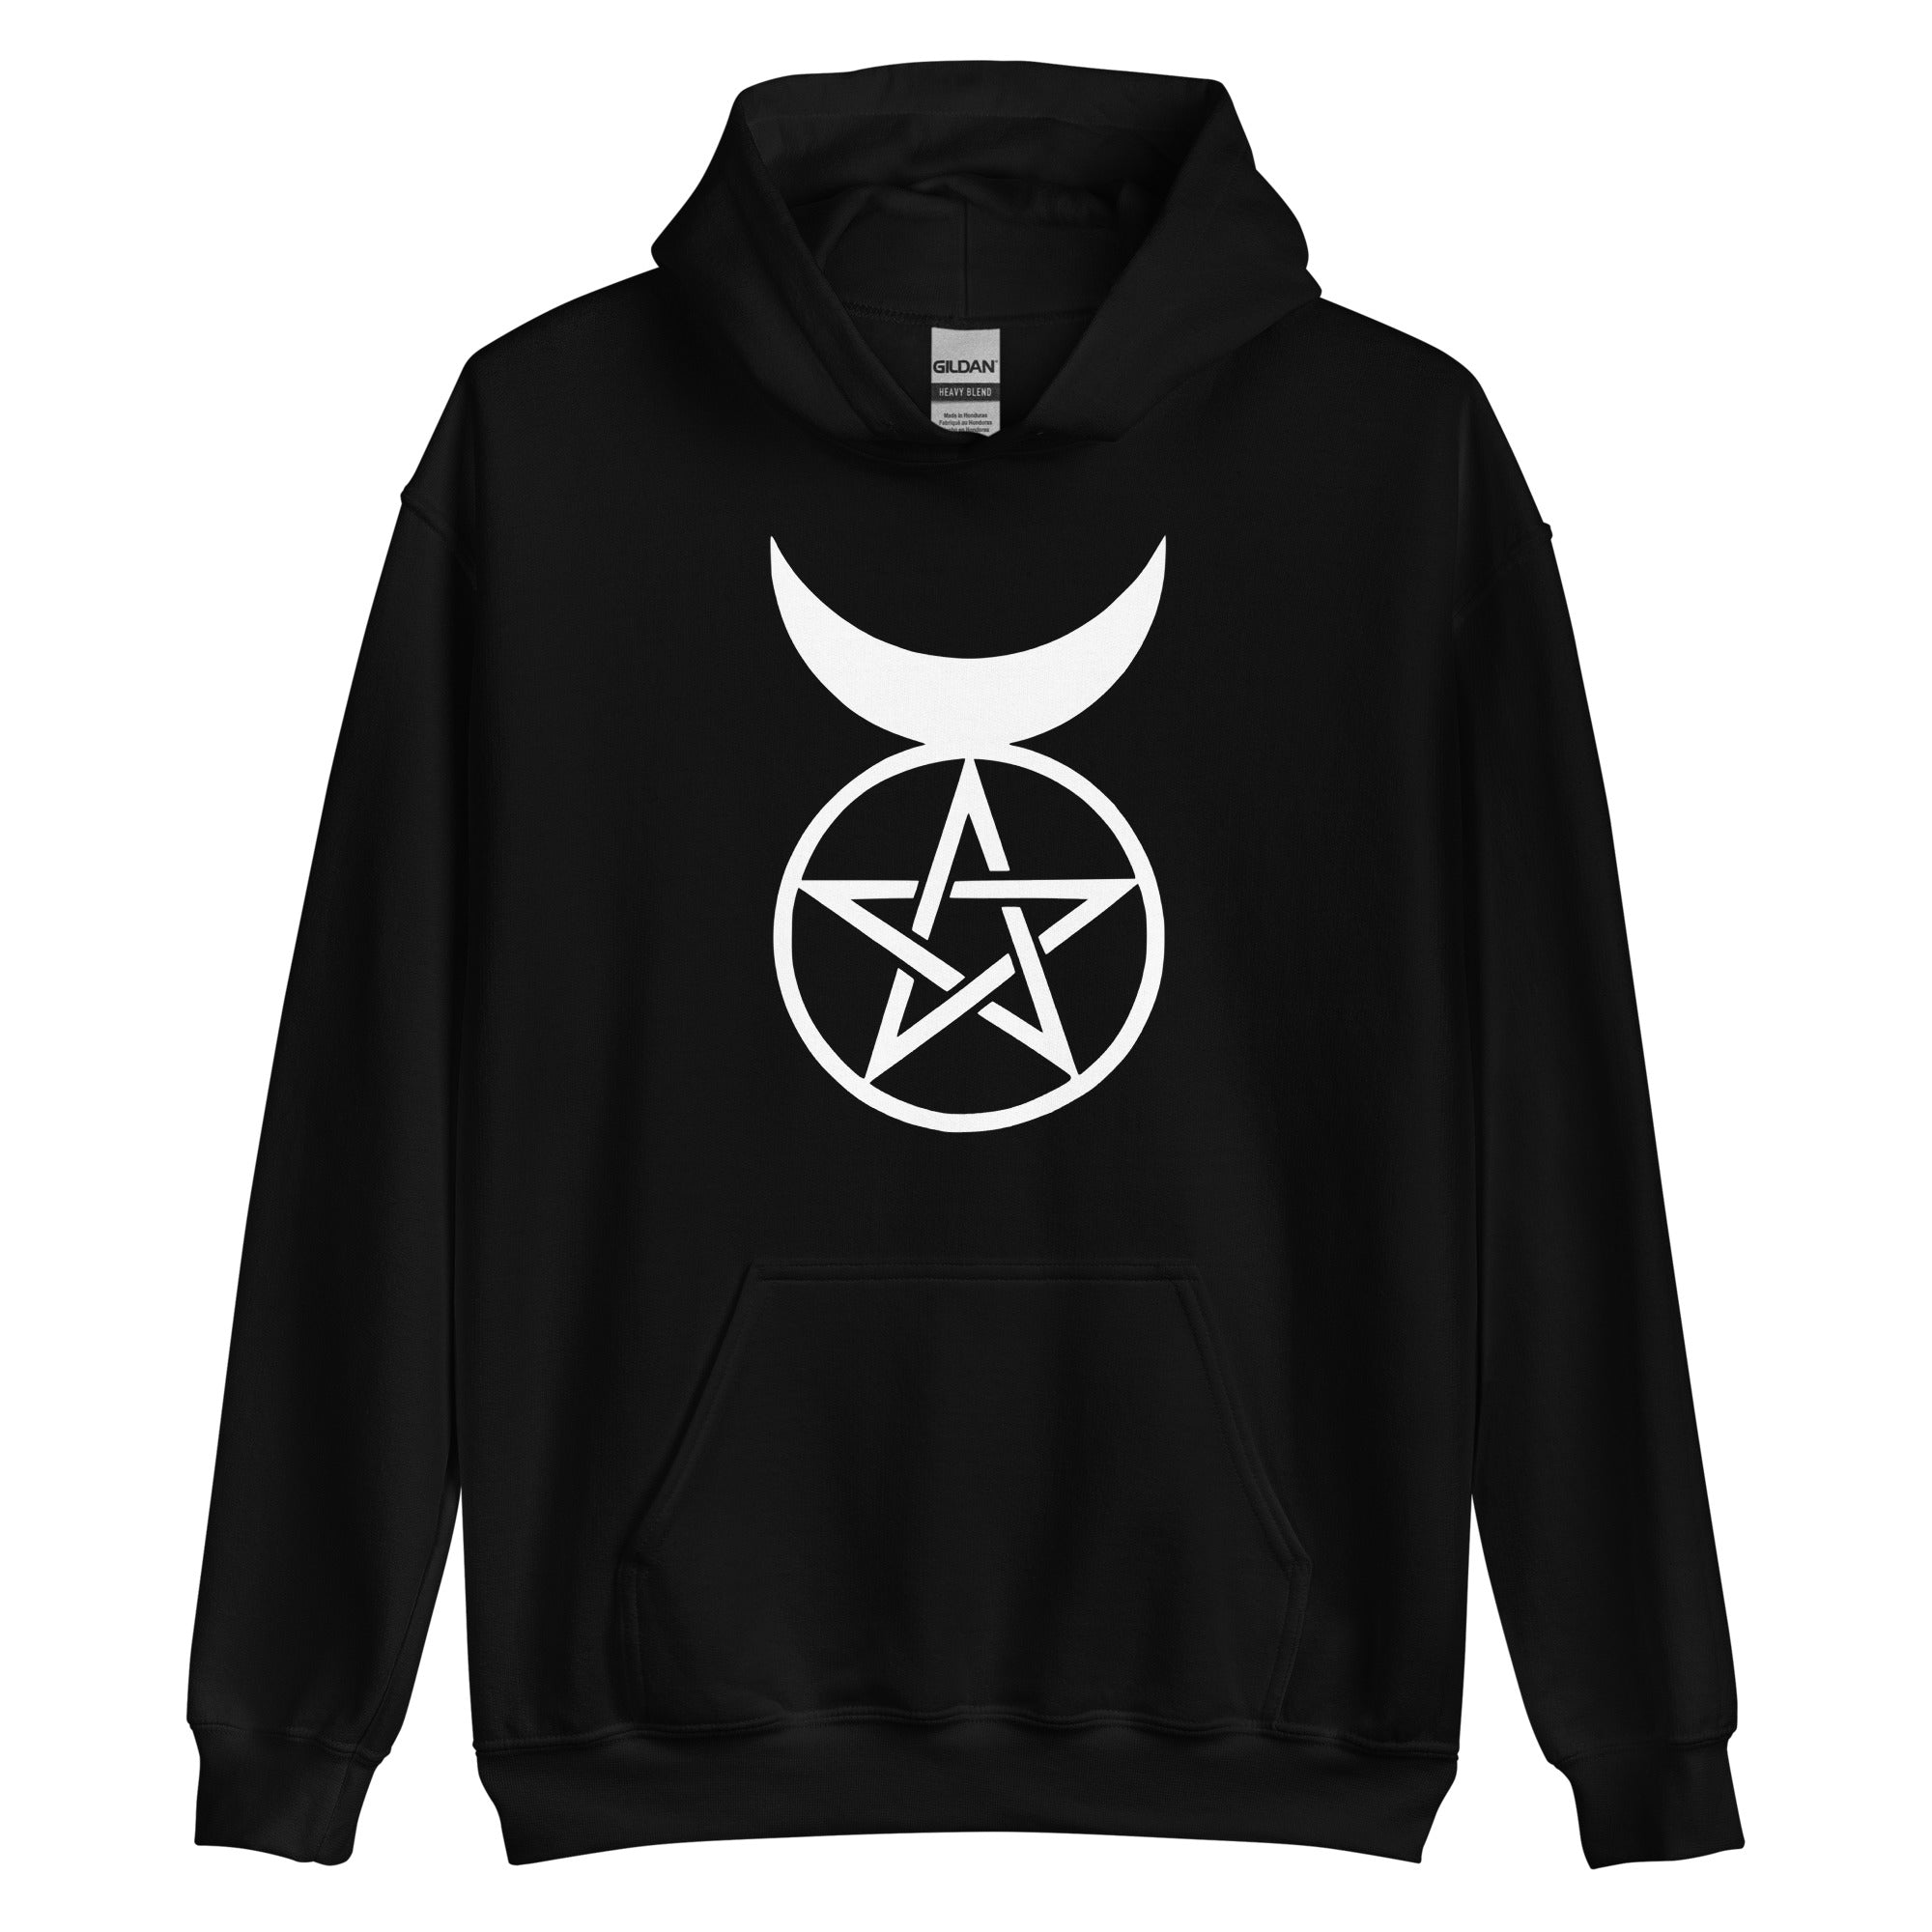 The Horned God Wicca Neopaganism Symbol Hoodie Sweatshirt